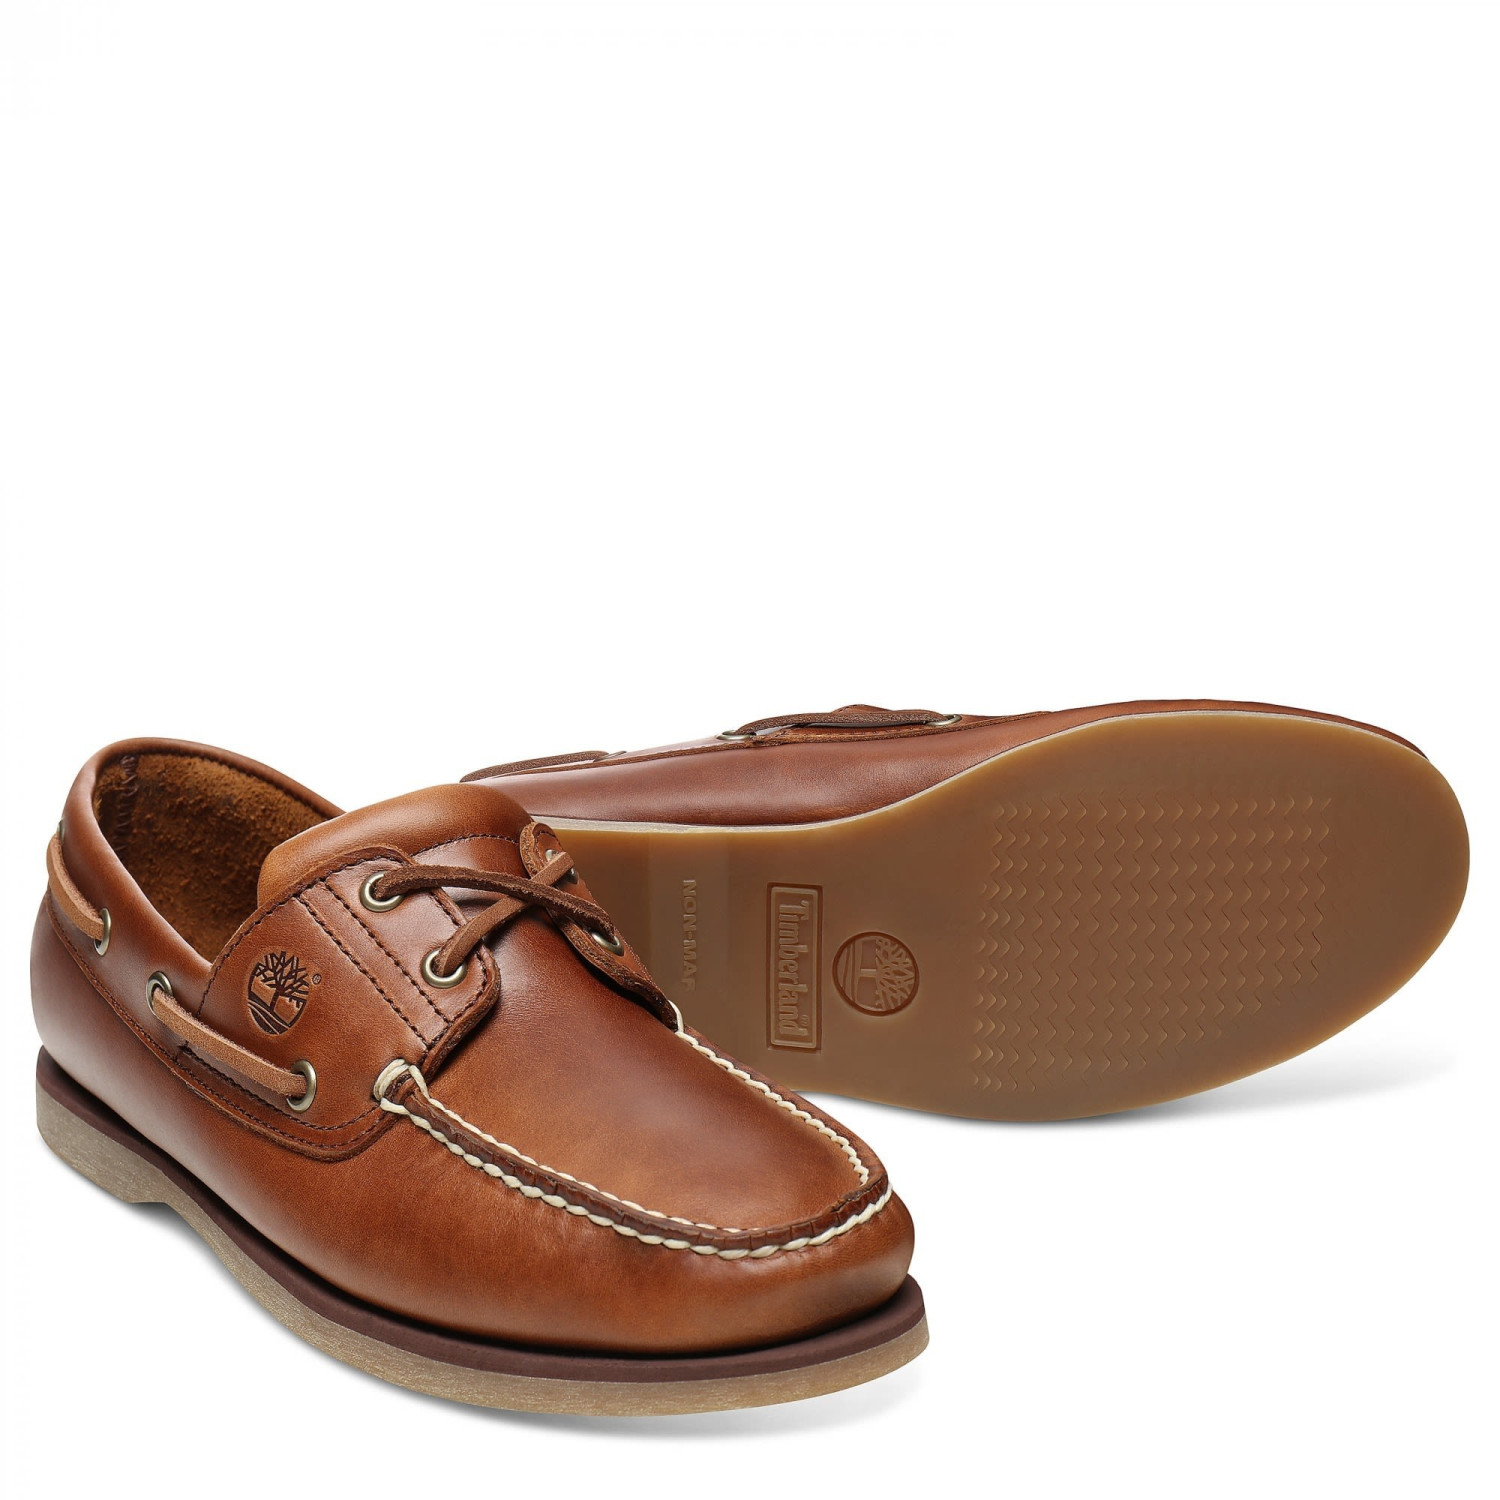 Timberland Mens Lace-Up Shoes Sahara brown (TB0A232X)